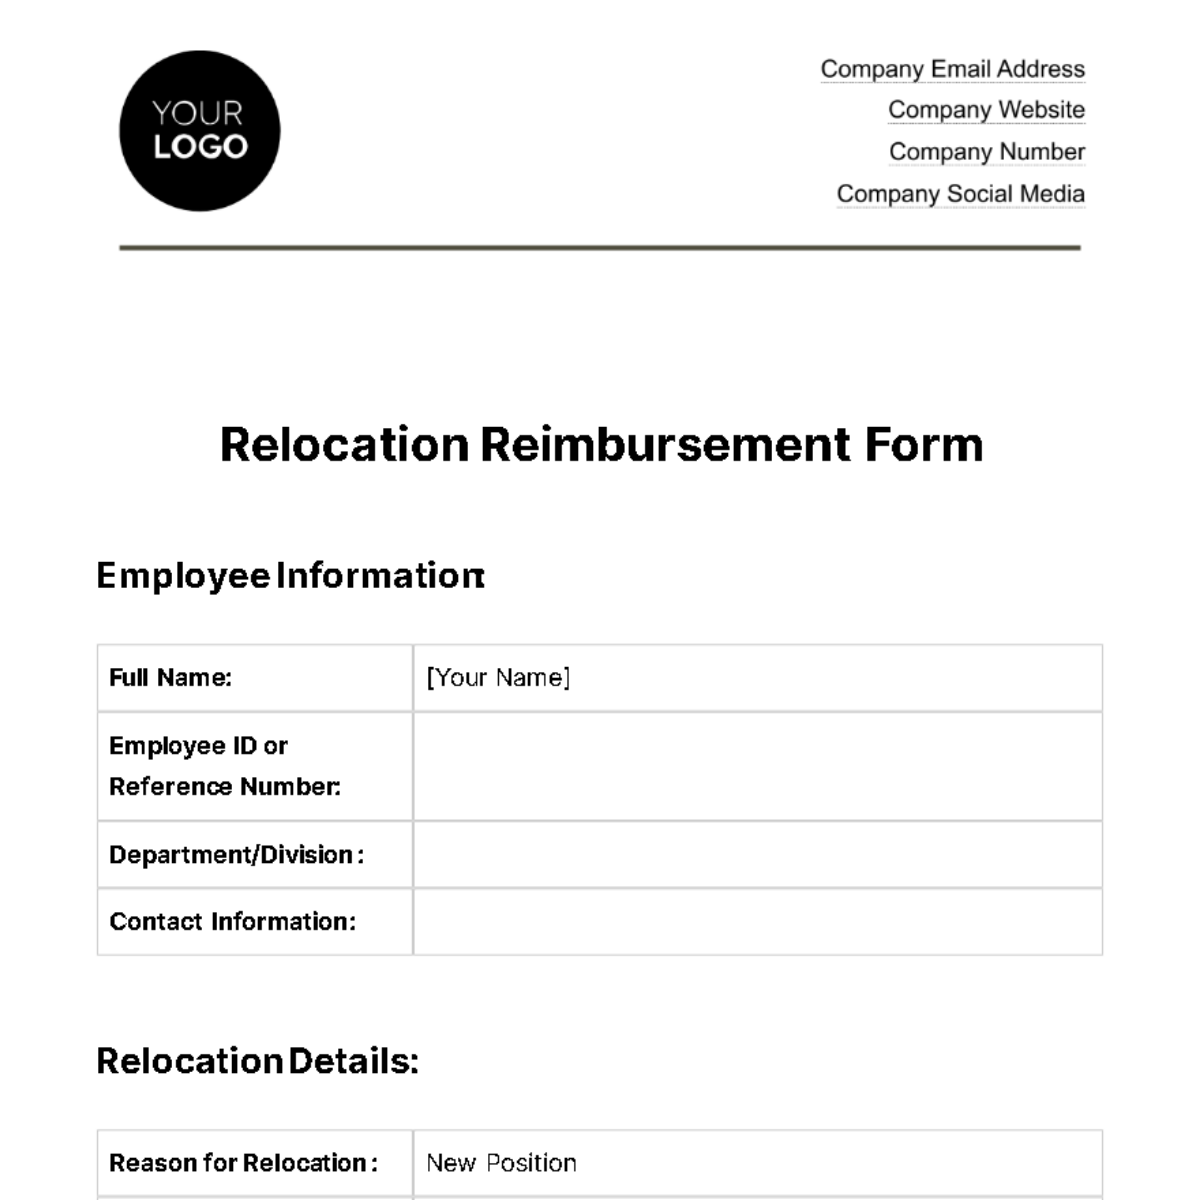 Relocation Reimbursement Form HR Template